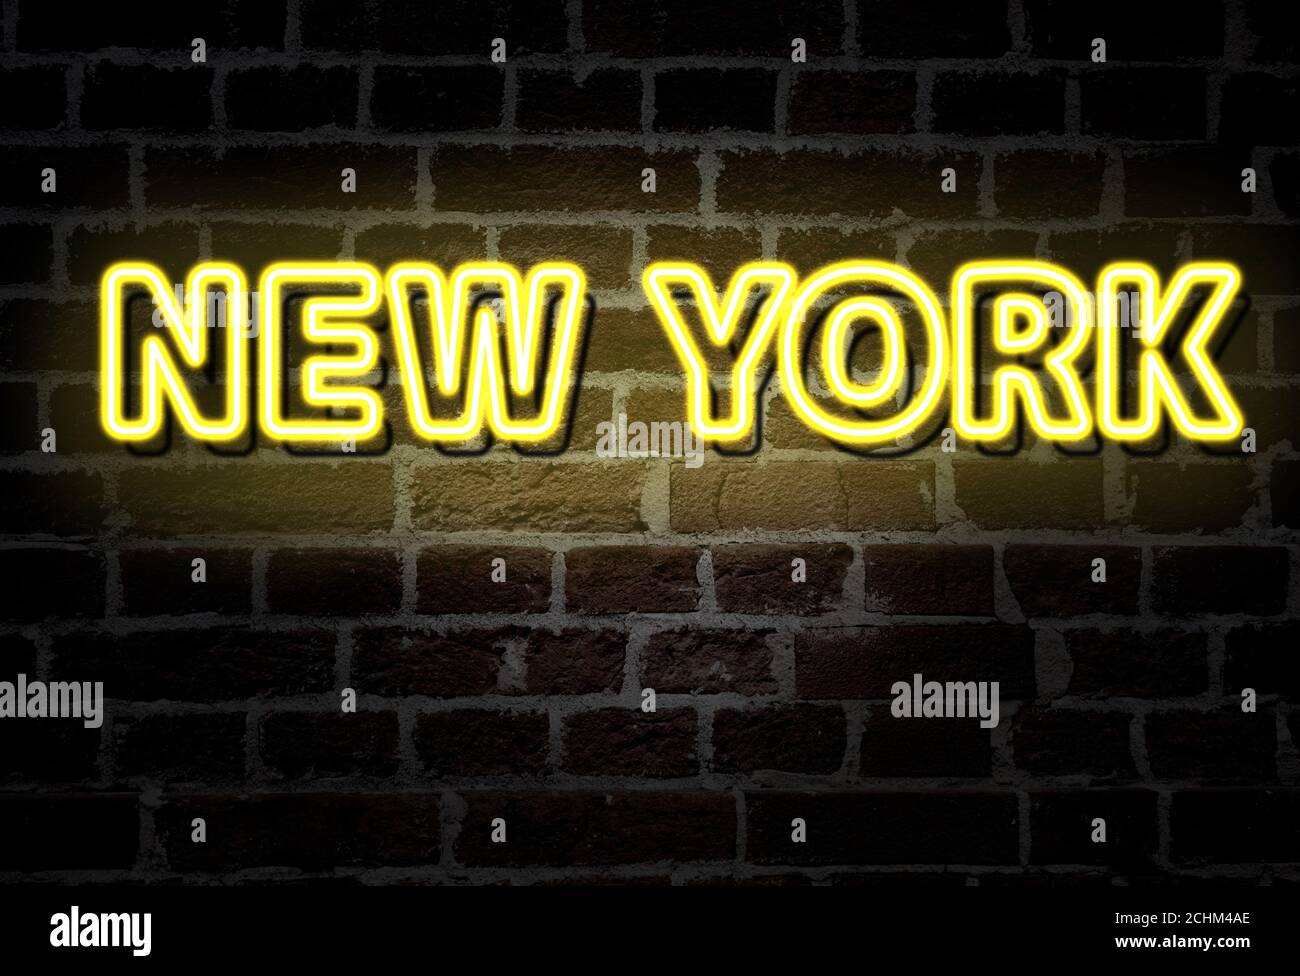 New York City - yellow neon sign on brick wall Stock Photo